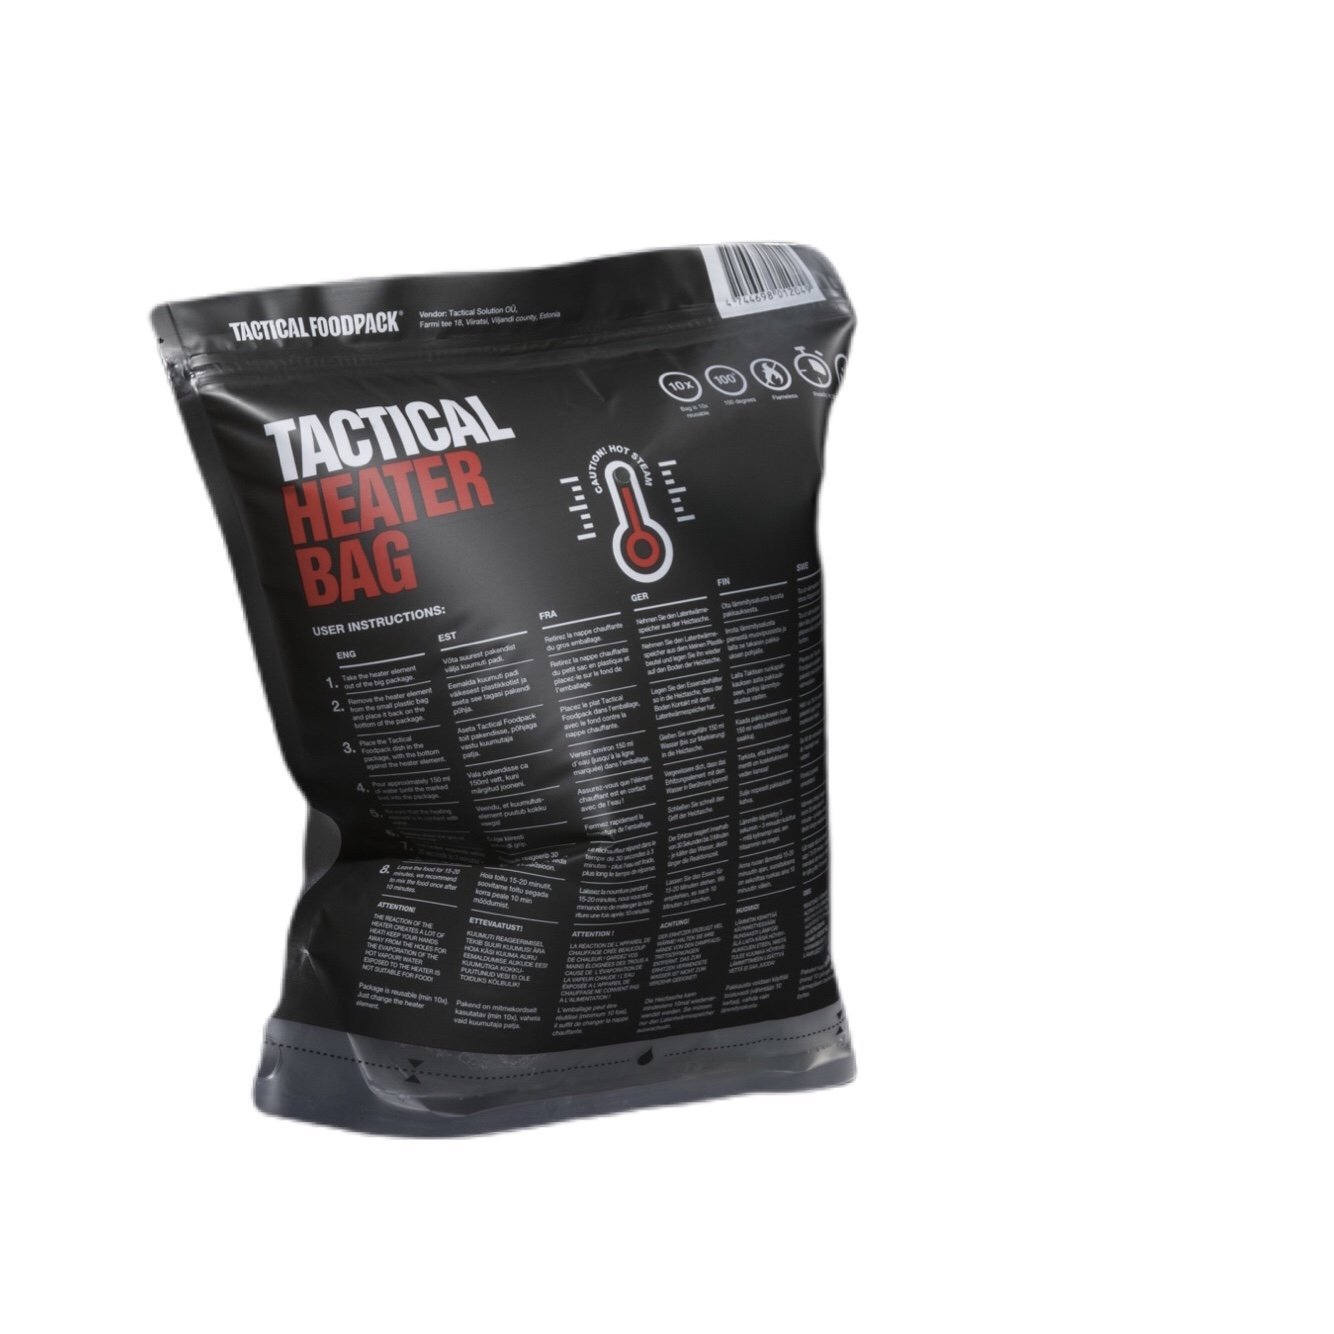 Tactical Foodpack Heater Bag